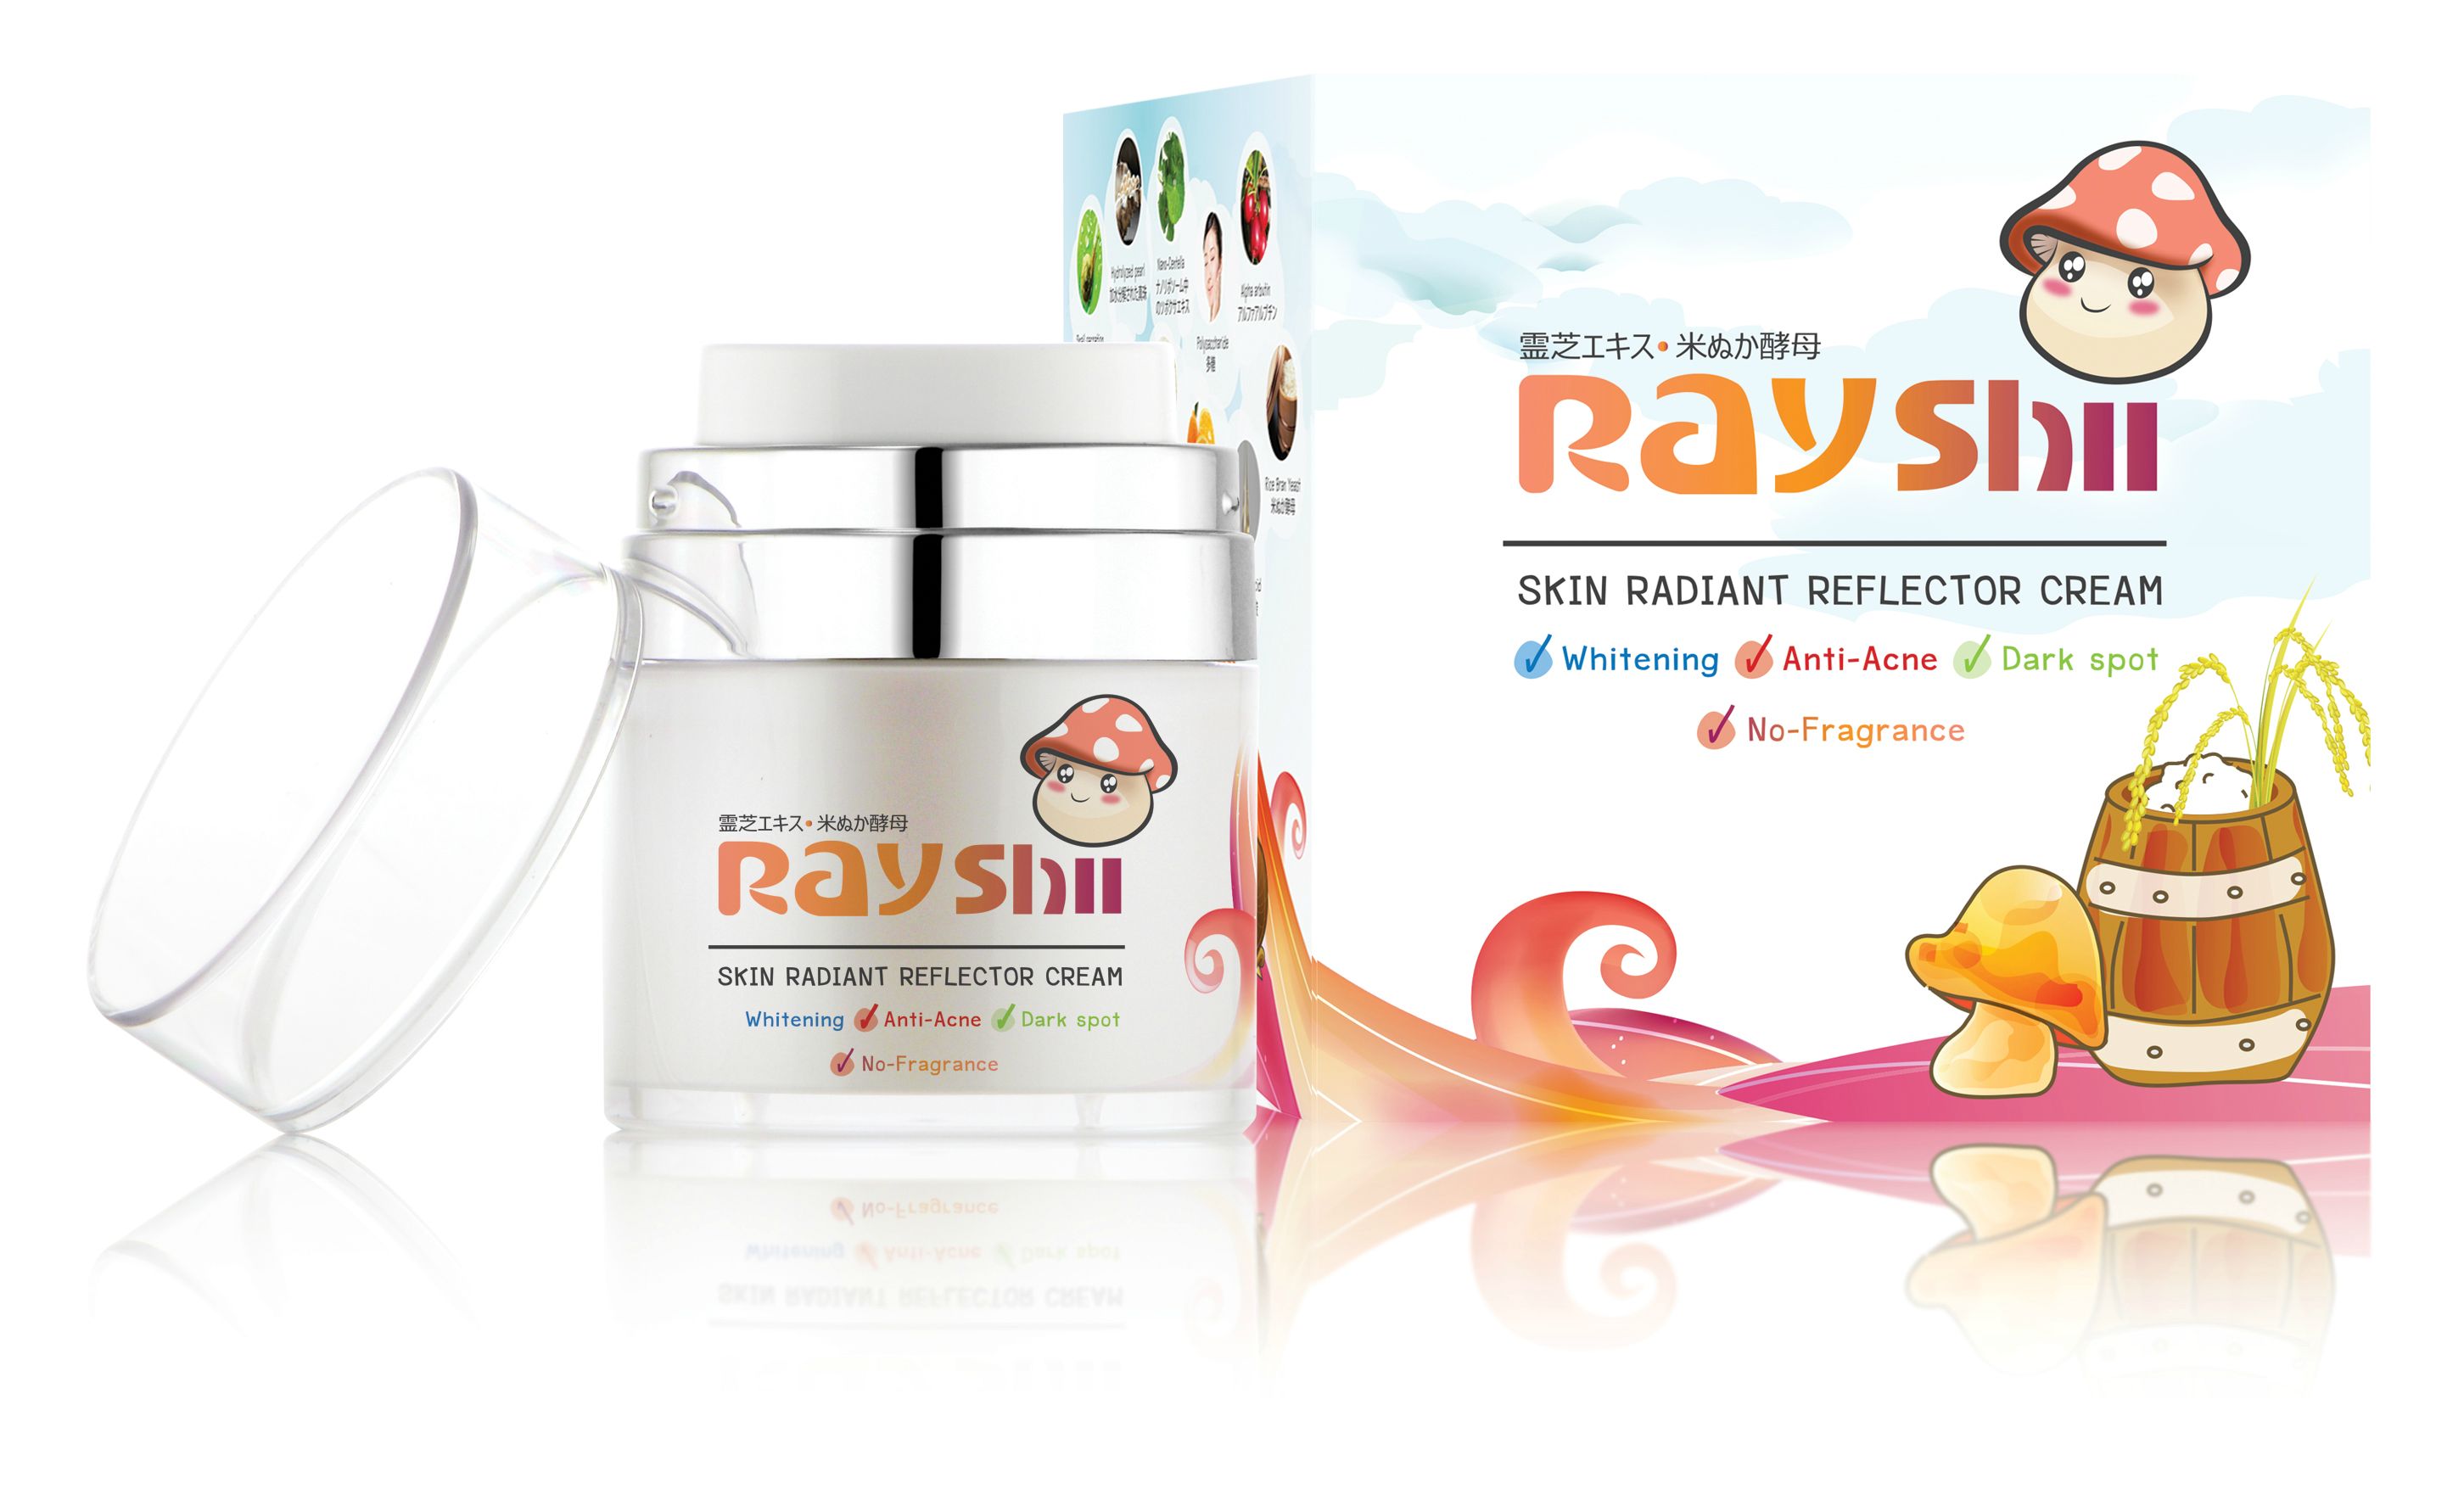 RayShi Skin Radiant Reflactor Cream